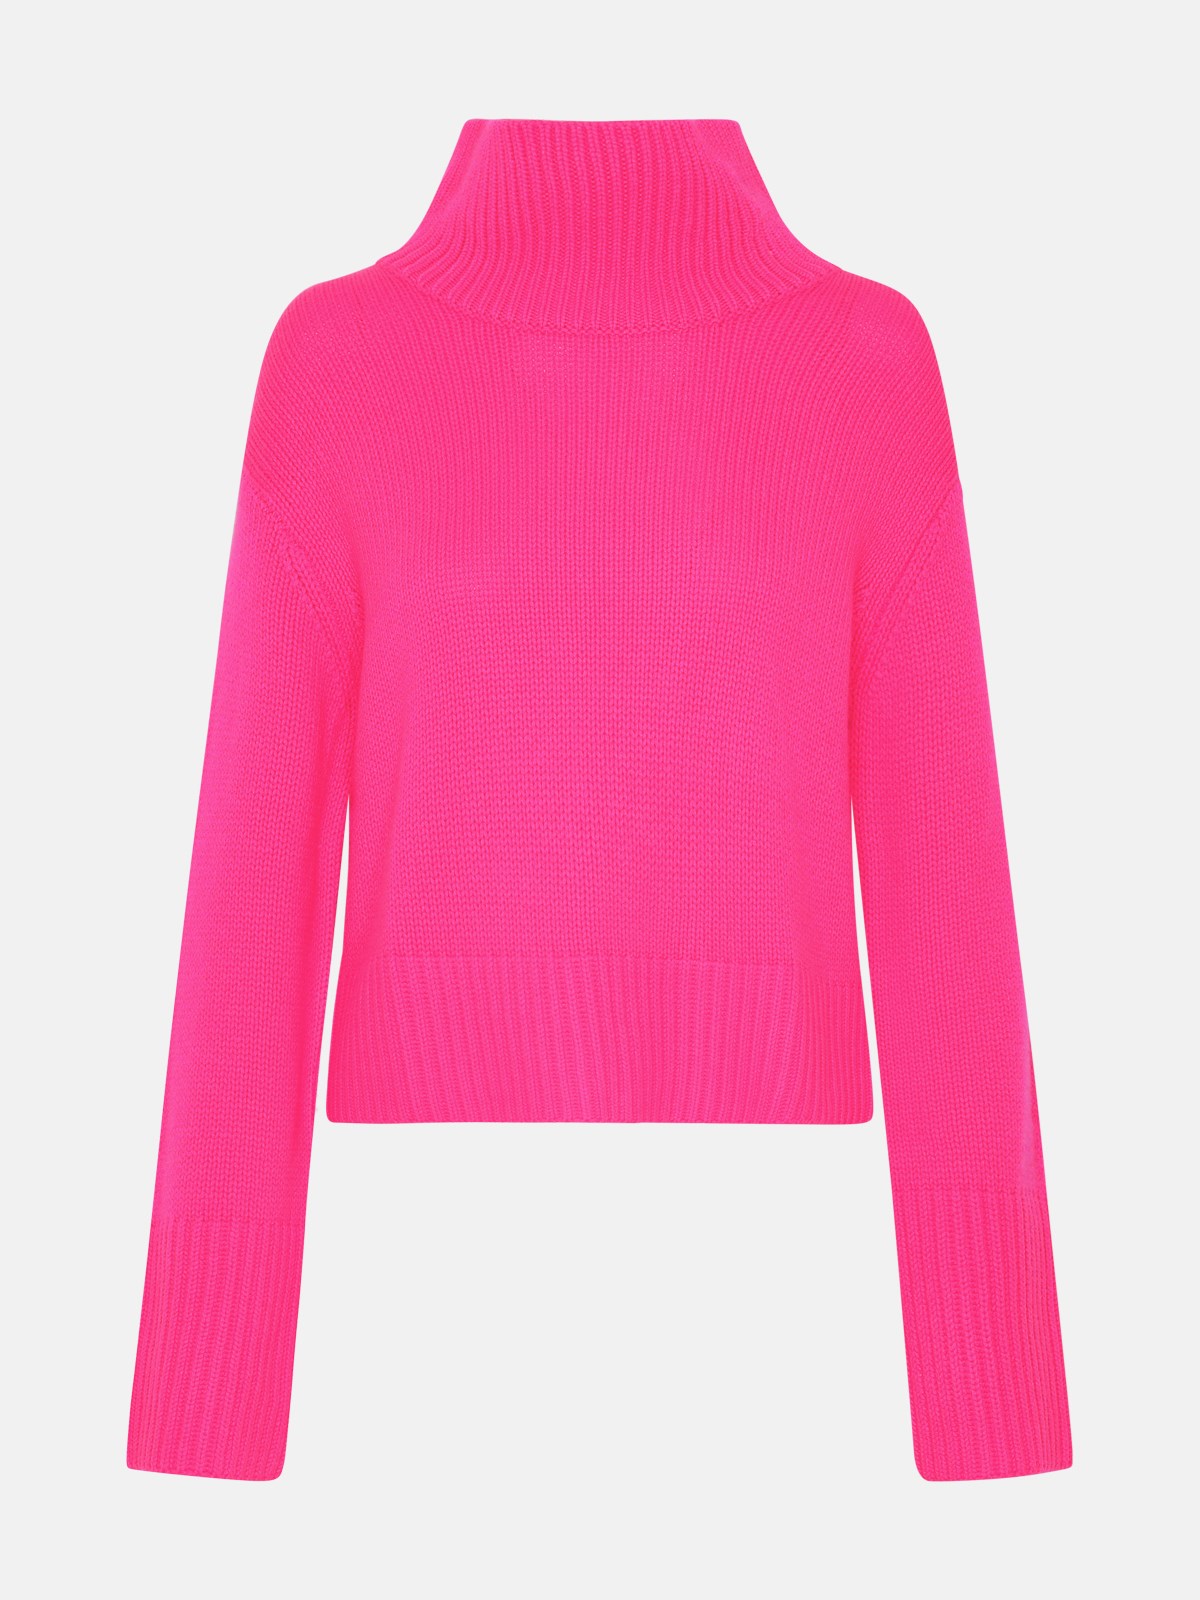 Lisa Yang Fuchsia Cashmere Fleur Turtleneck Sweater